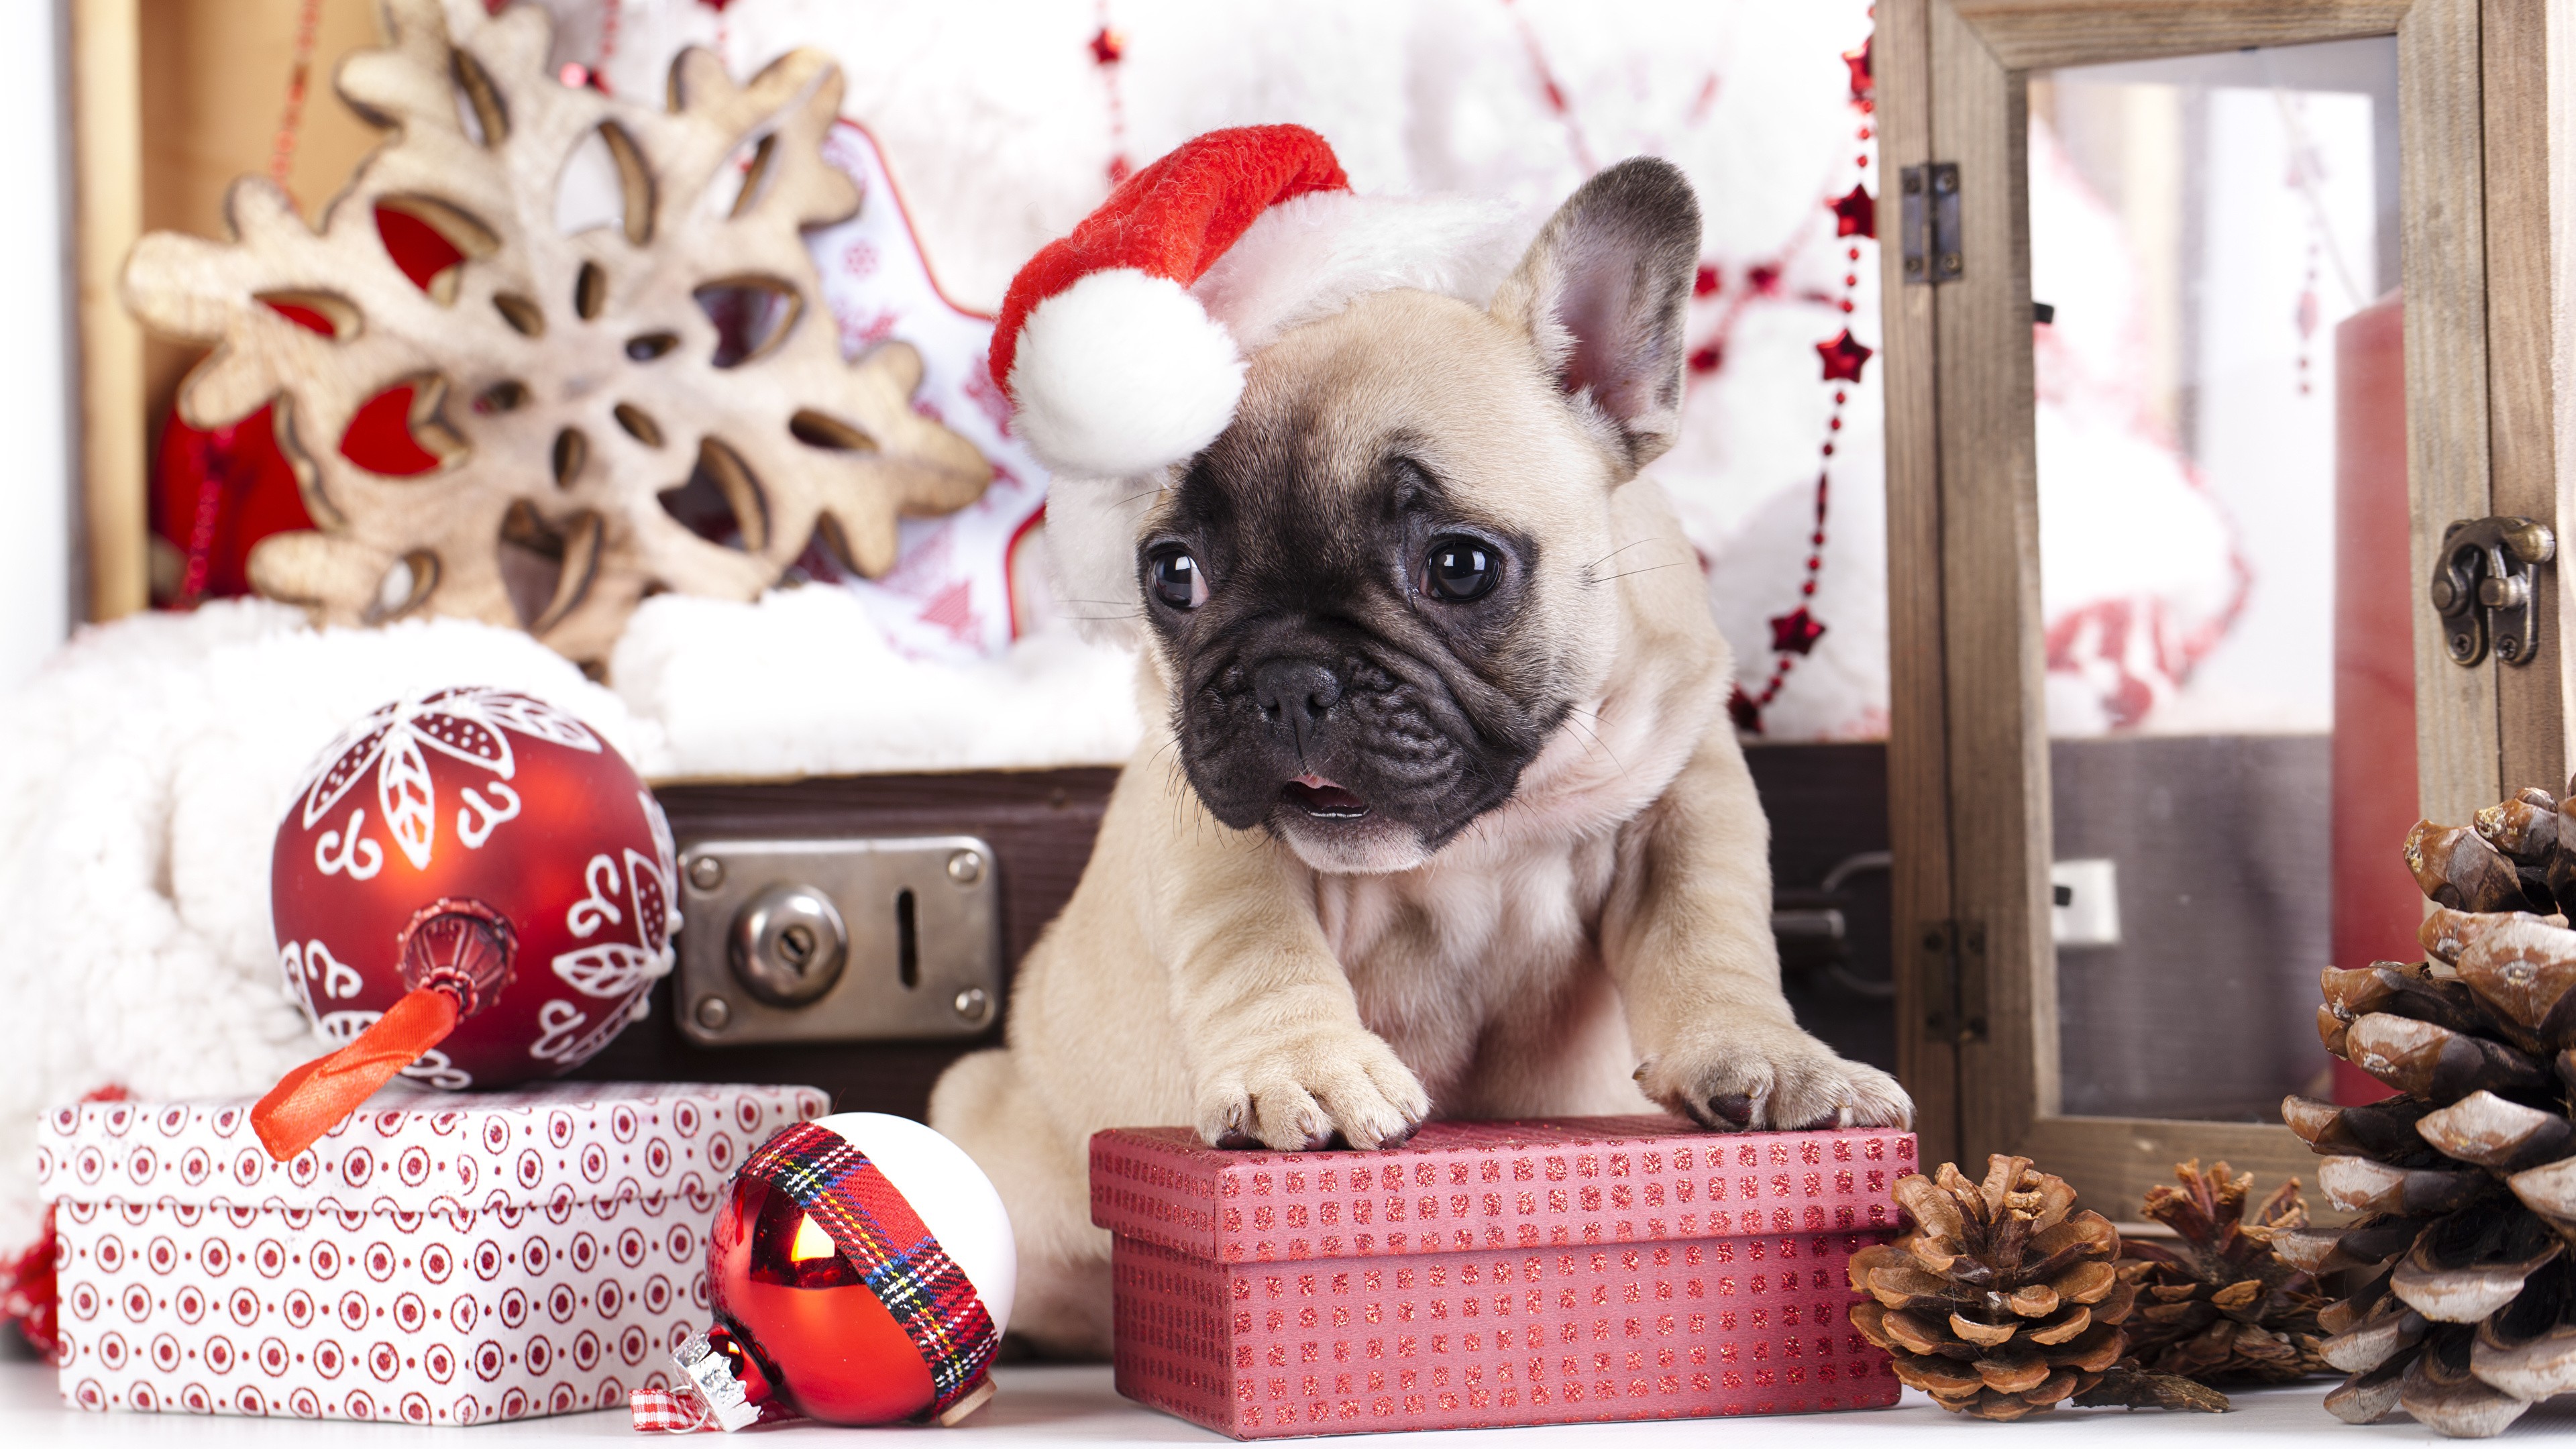 Cachorro Pug festejando Navidad Fondo de pantalla 4k Ultra HD ID:4168